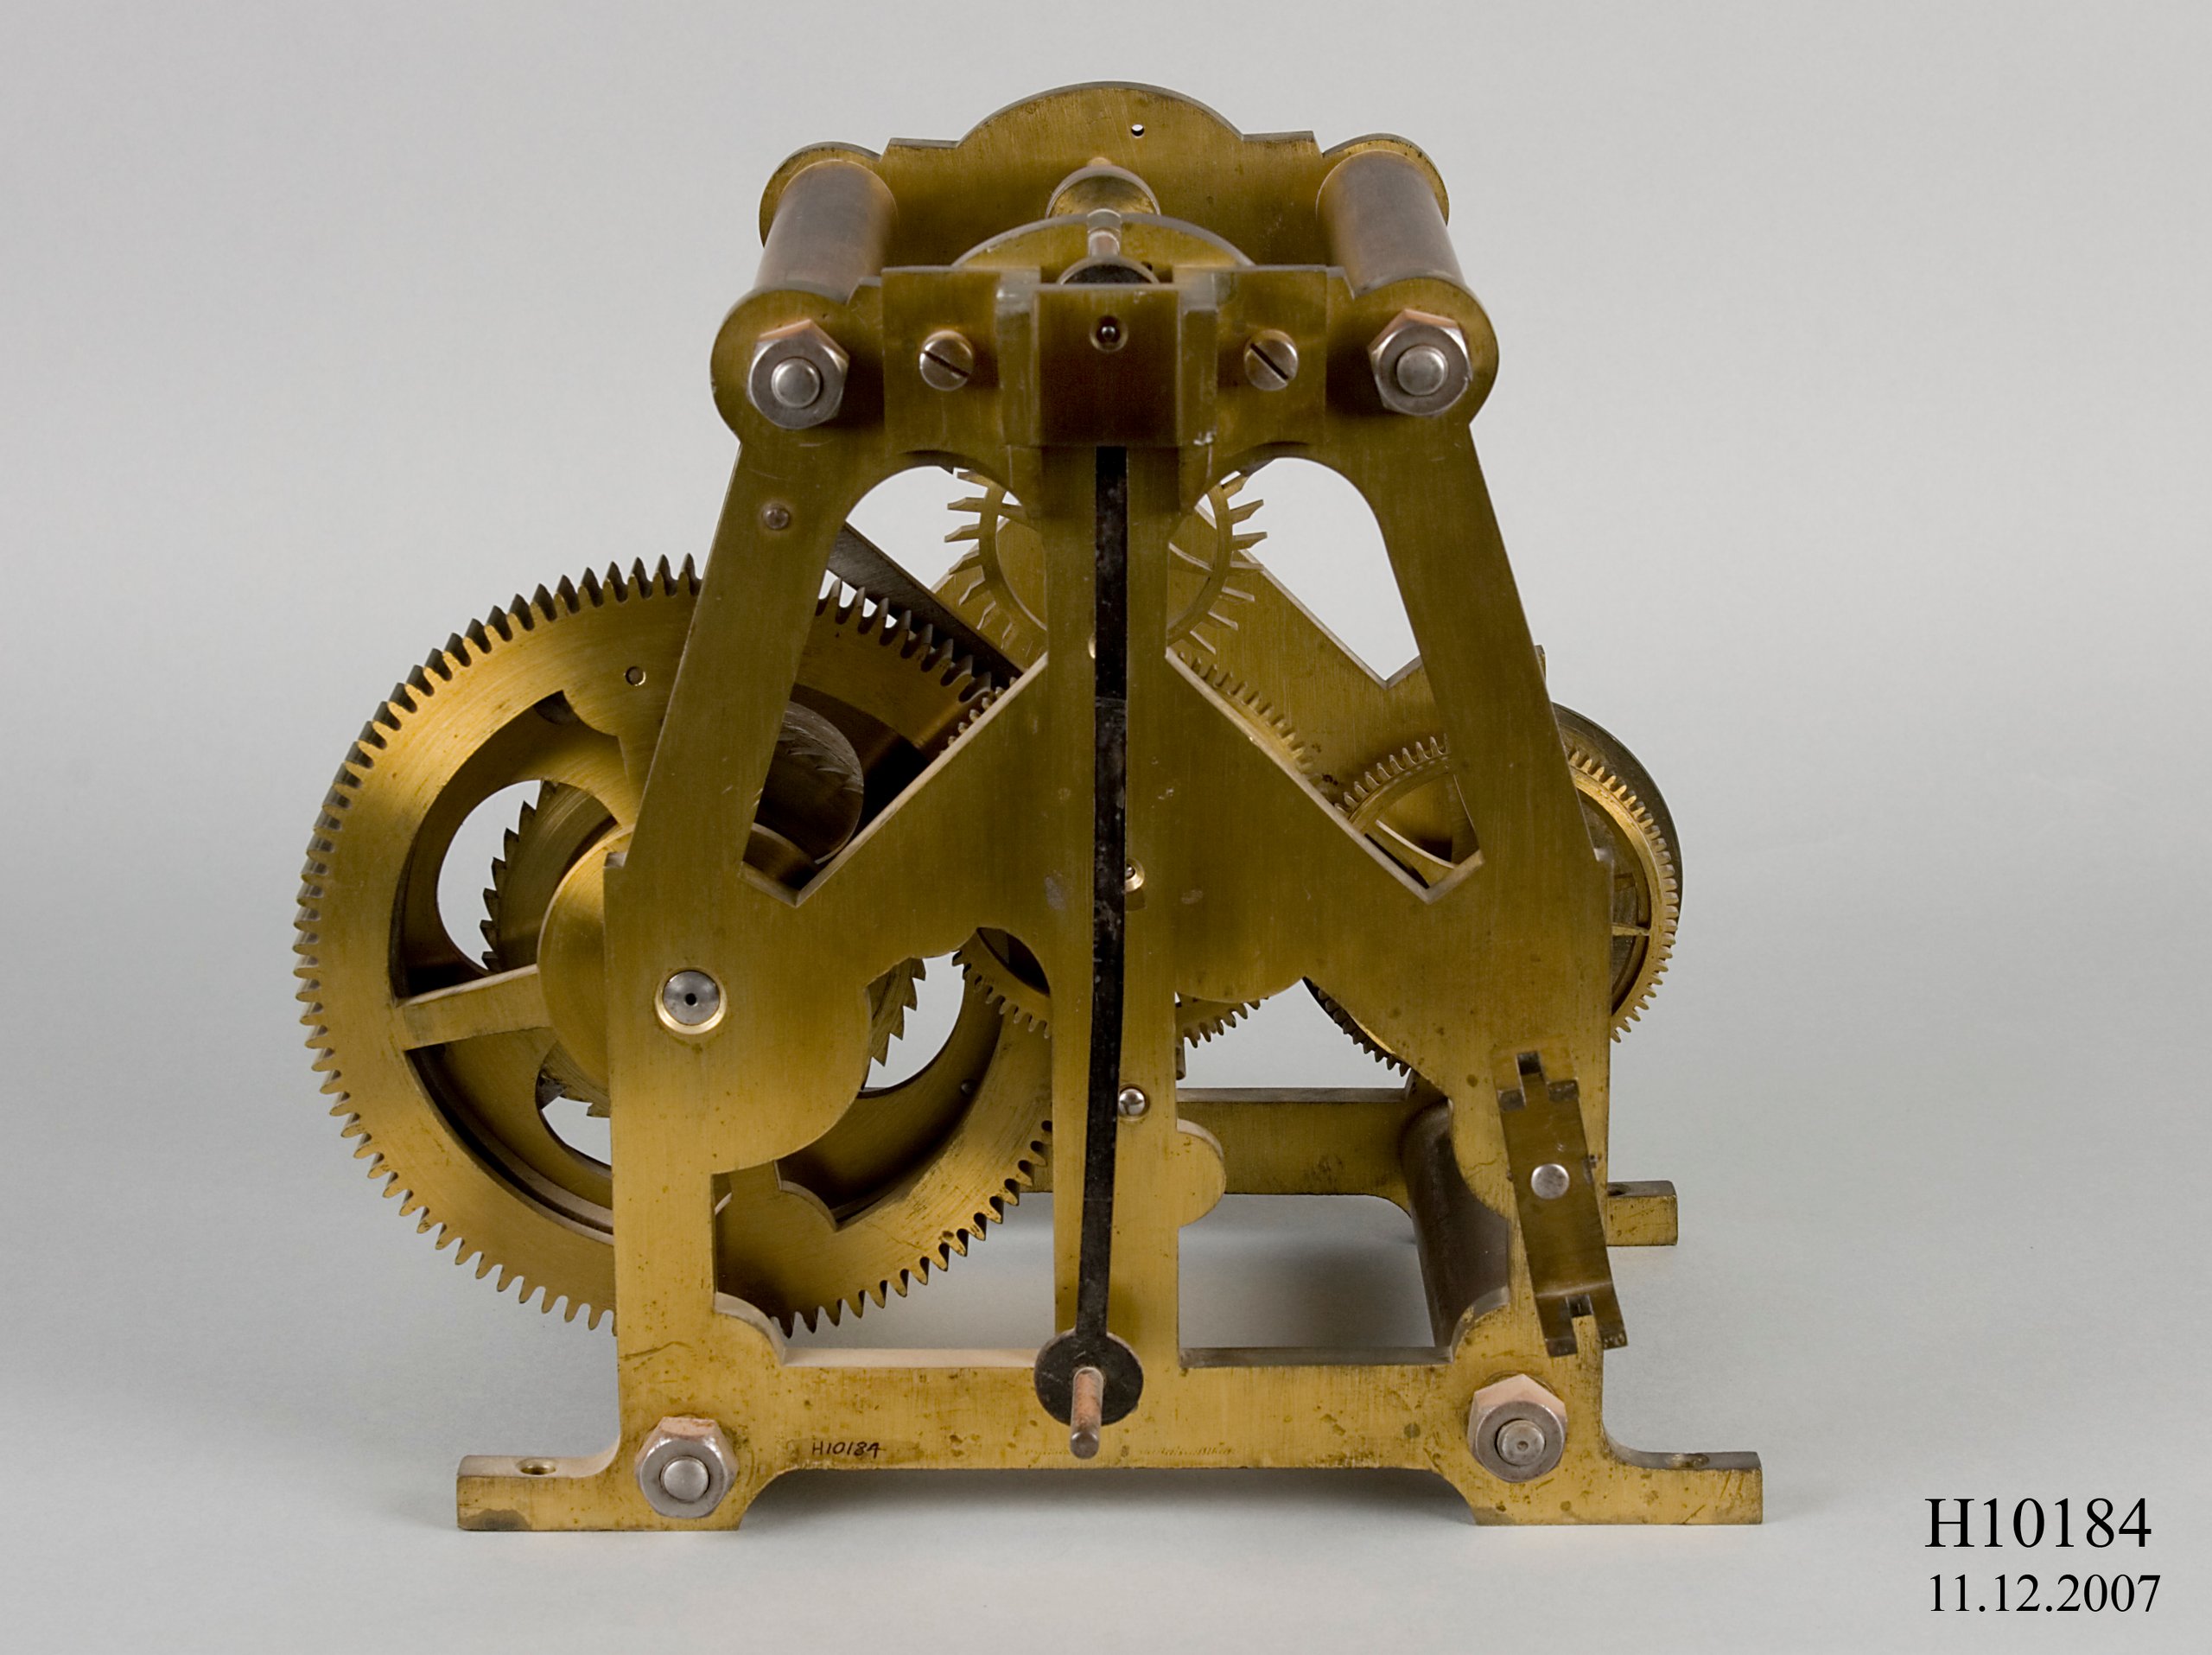 Turret clock drive used at Sydney Observatory